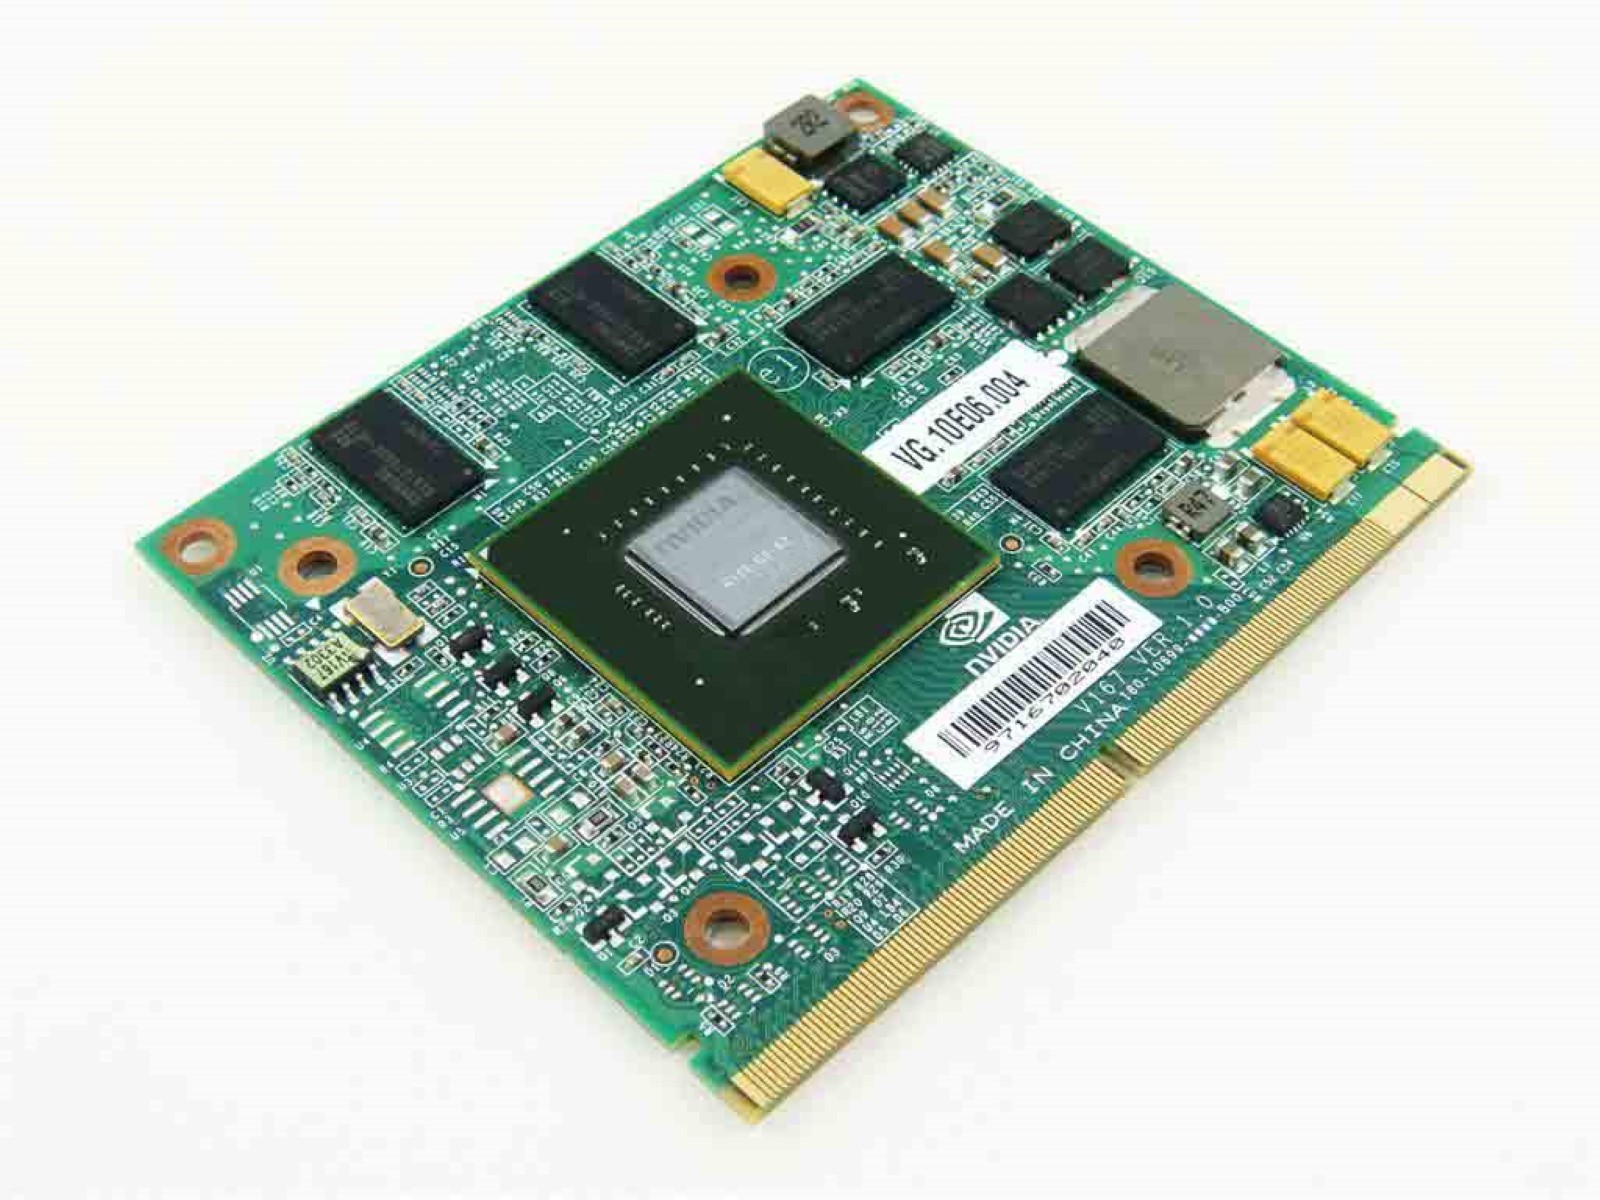 nVidia GTS 250M MXM Card